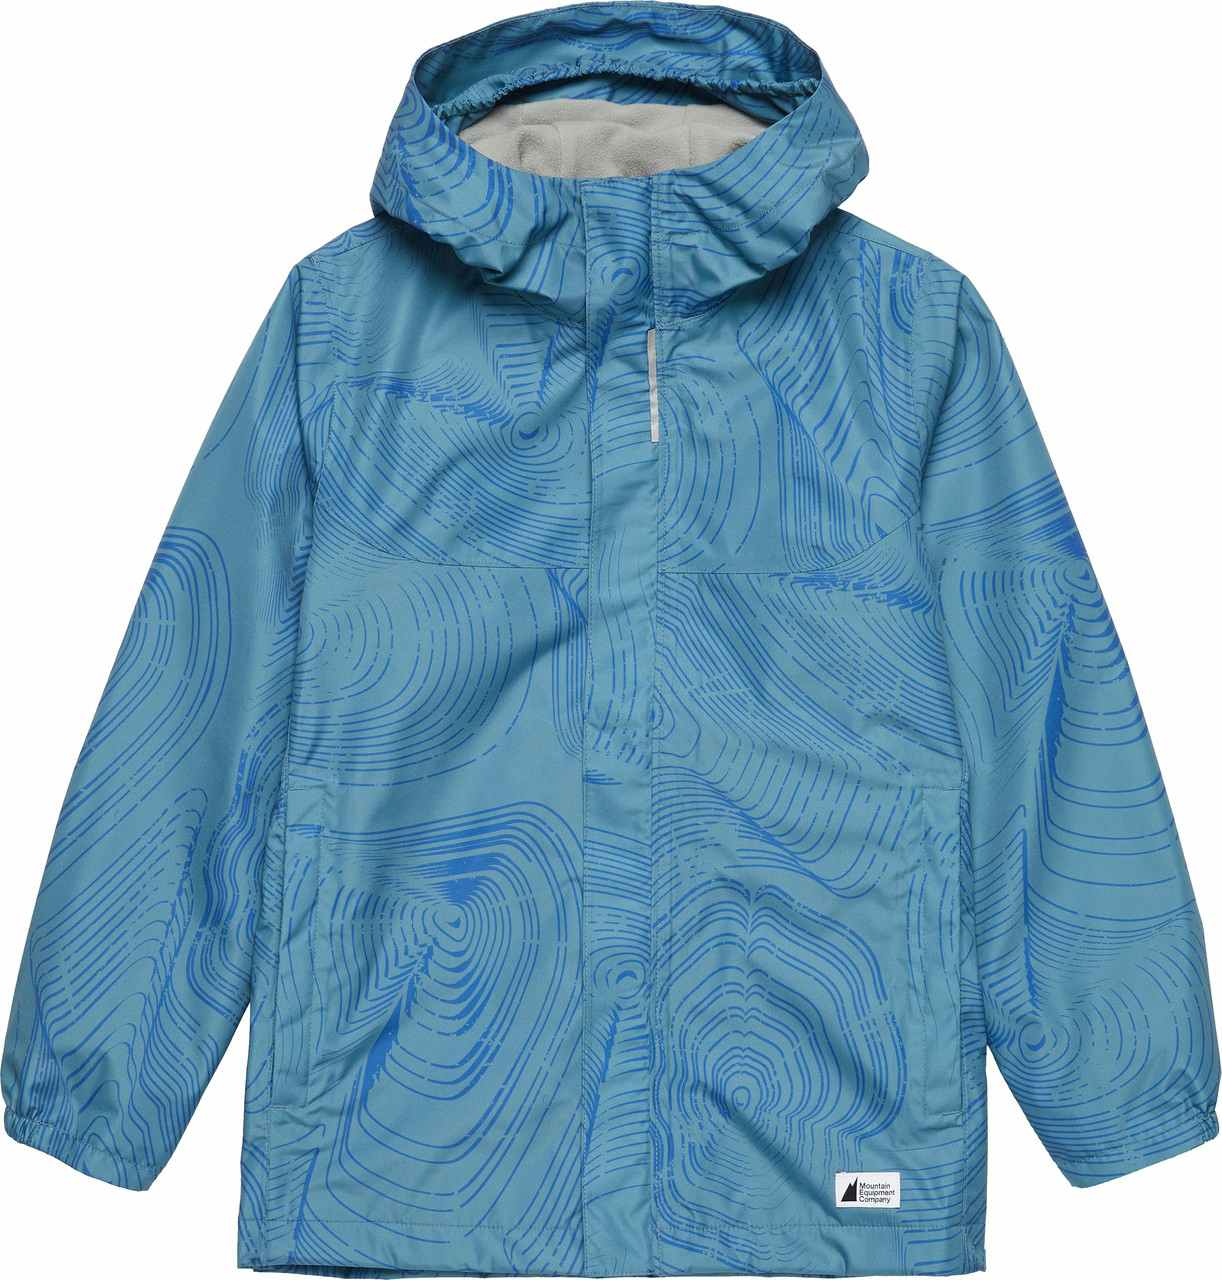 Cozy Aquanator Jacket Blue Dendro